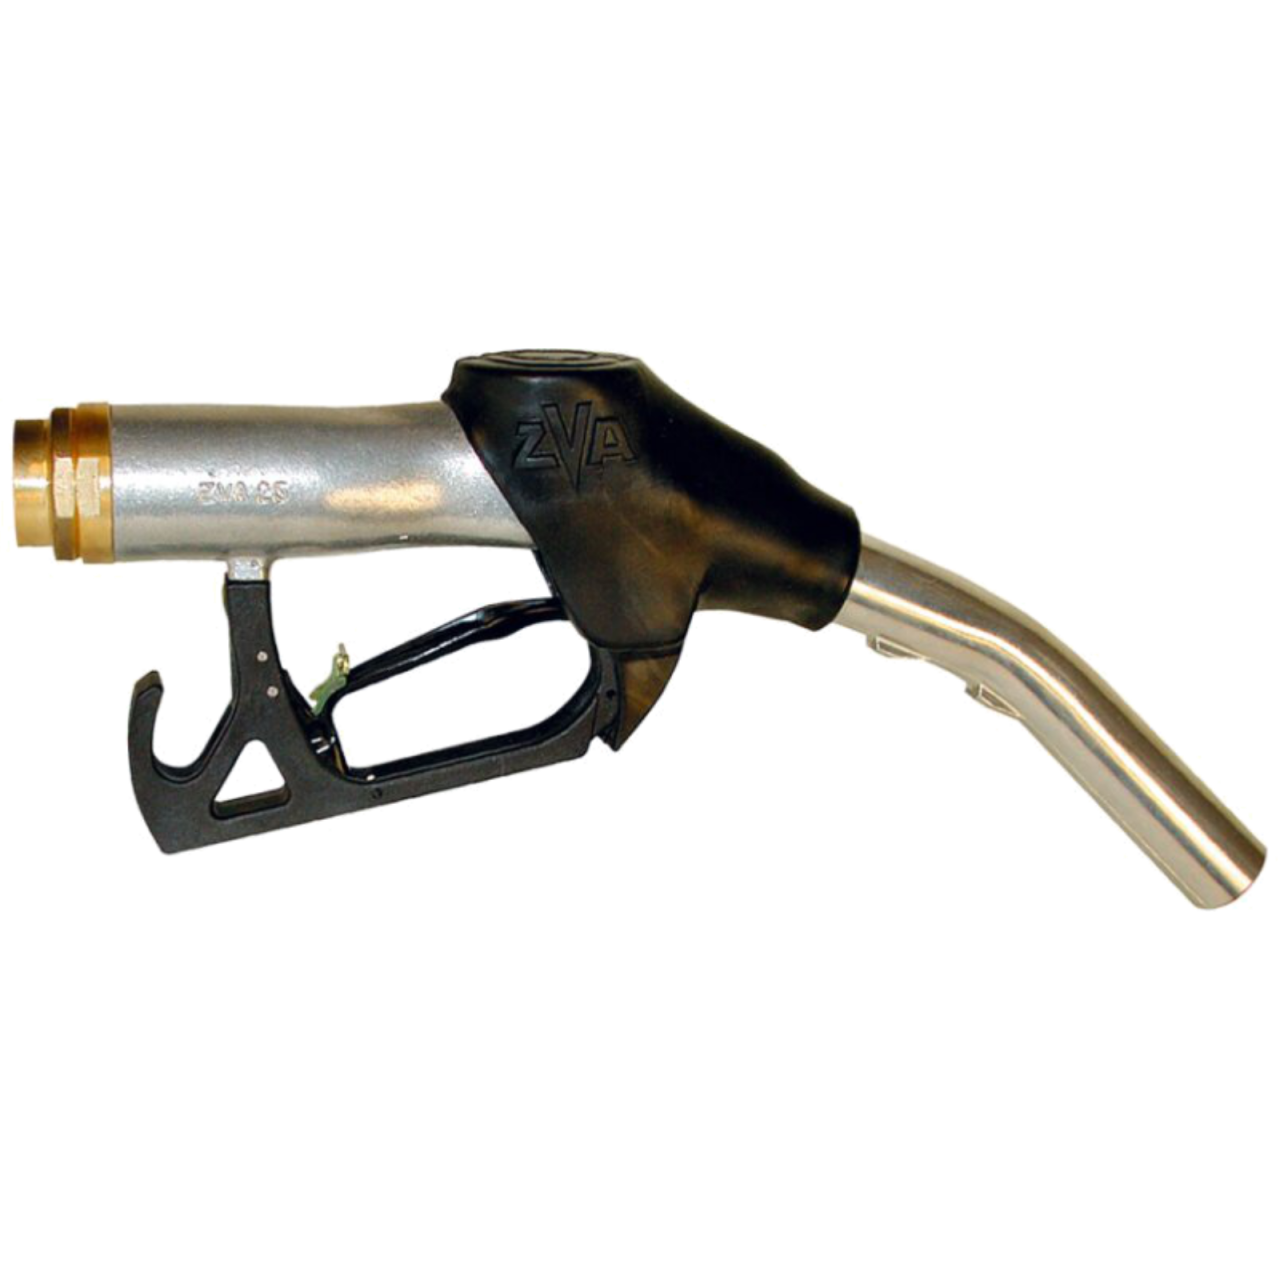 Zapfpistole Horn ZVA25 mit Bauartzulassung